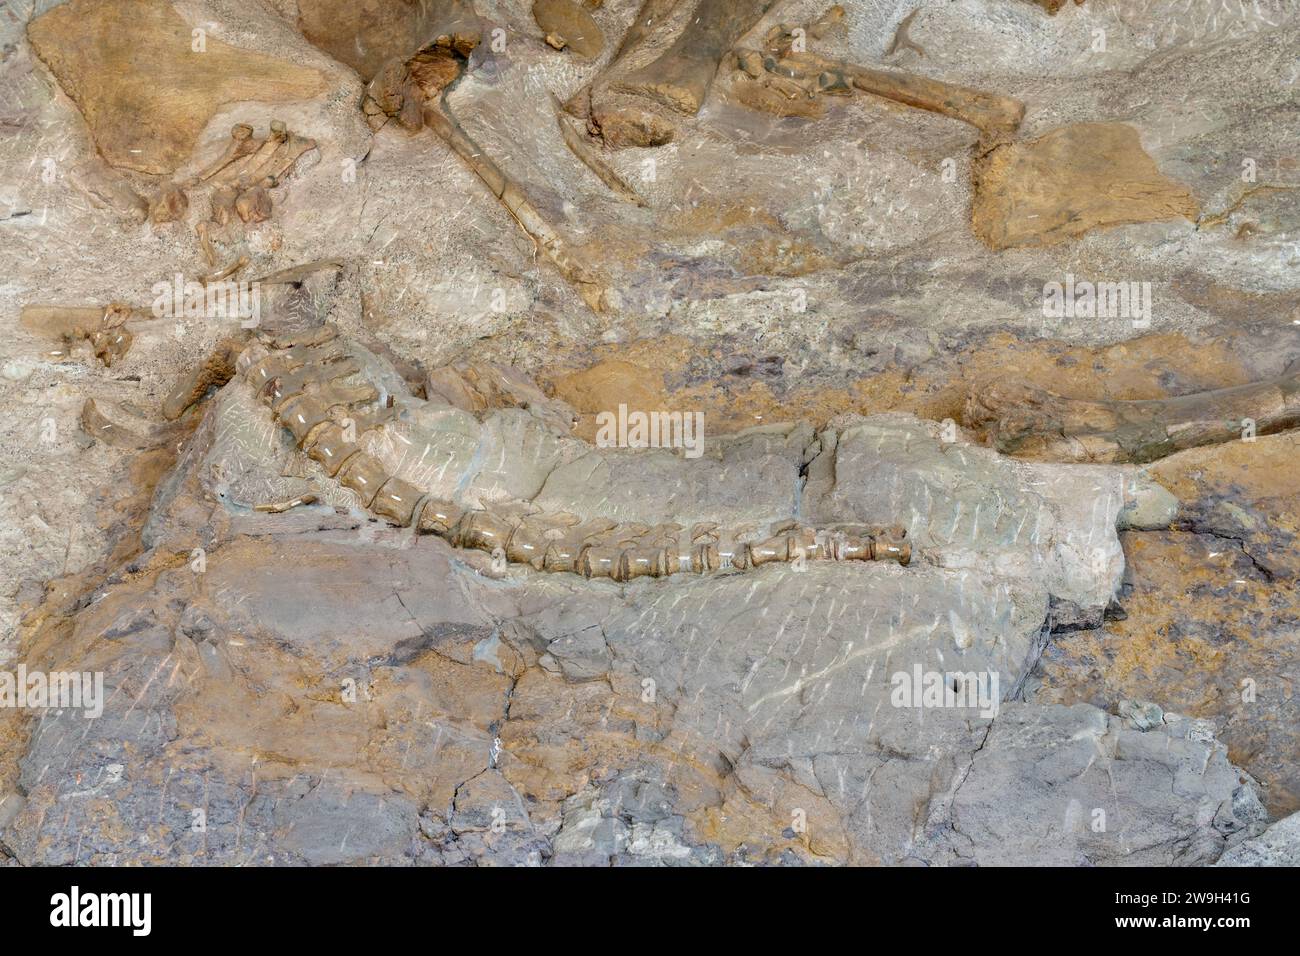 Partially-excavated dinosaur vertabra bones on the Wall of Bones in the Quarry Exhibit Hall, Dinosaur National Monument, Utah. Stock Photo